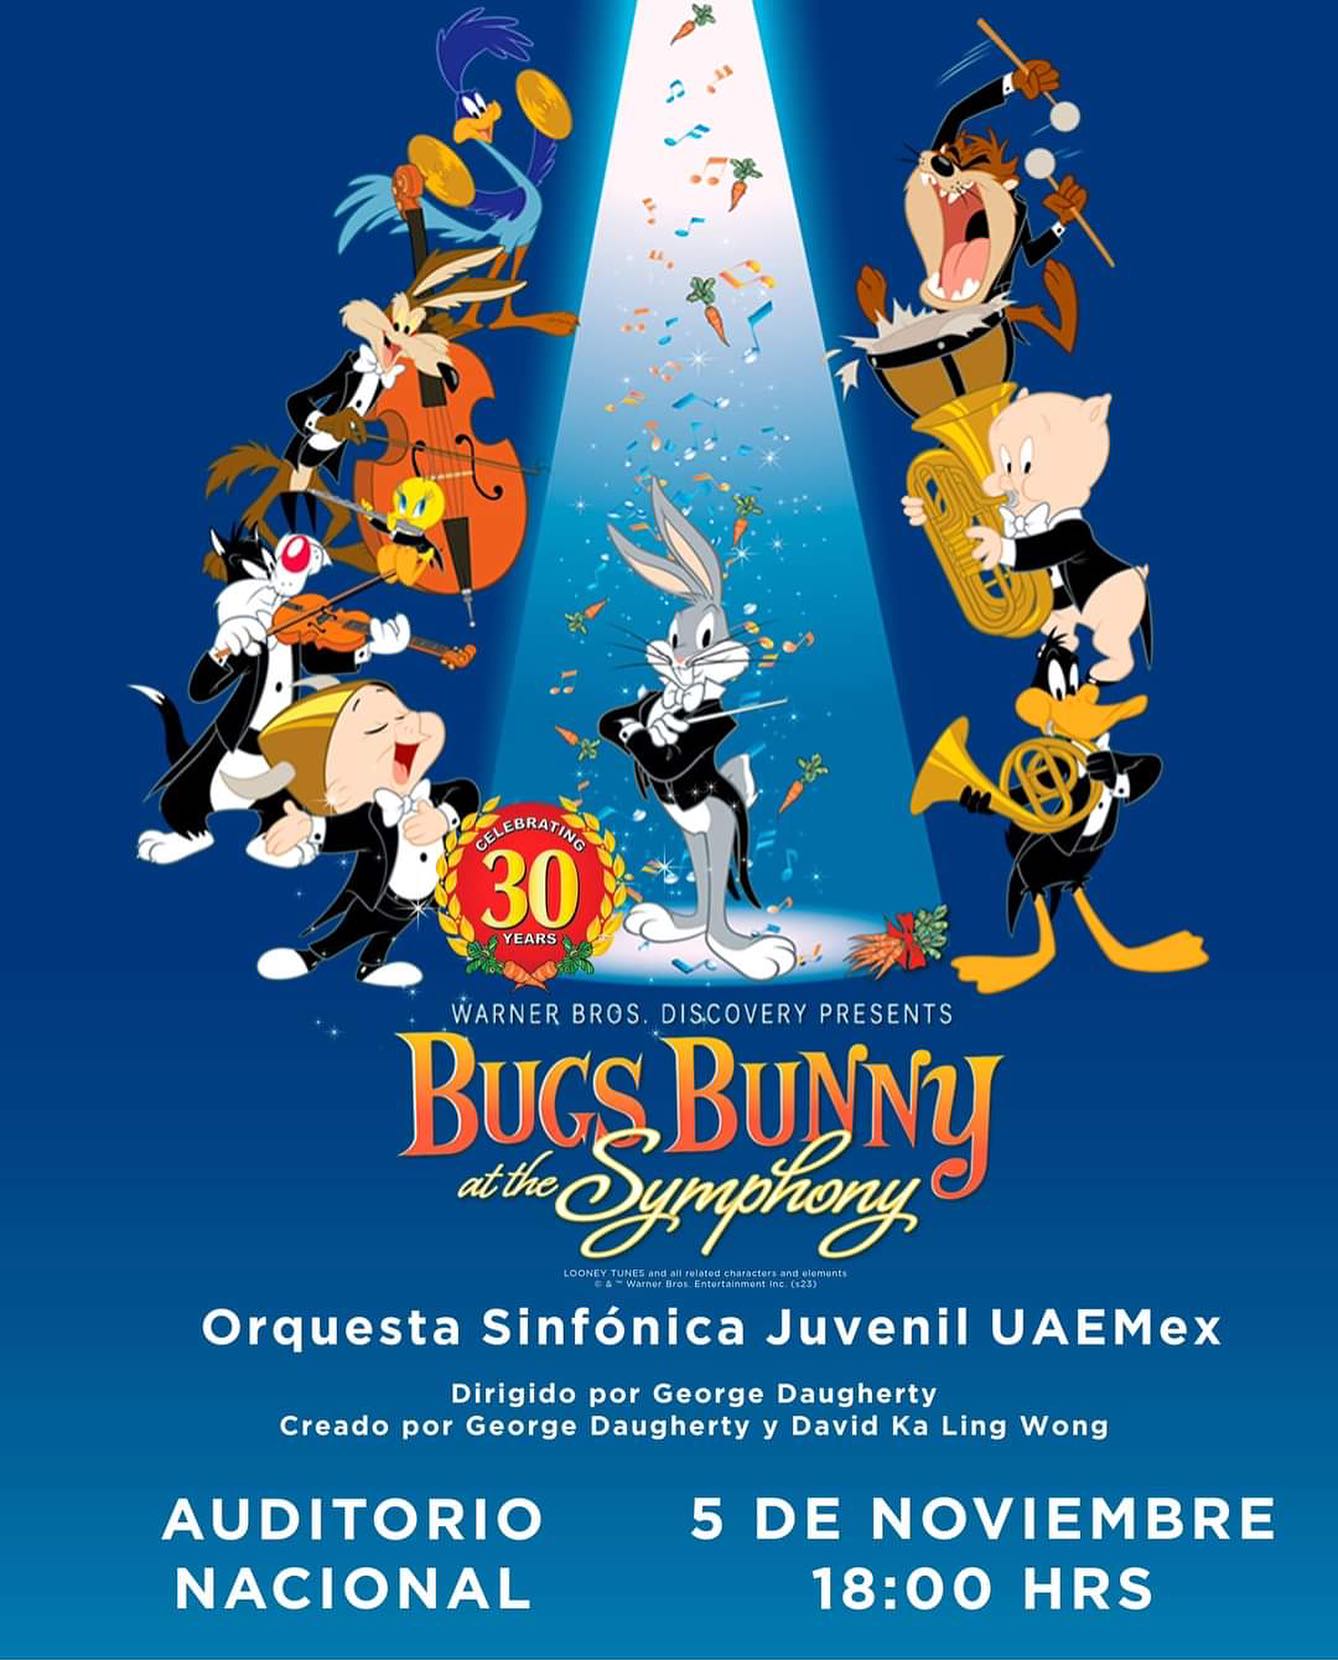 Bugs Bunny at the Symphony llegará al Auditorio Nacional!